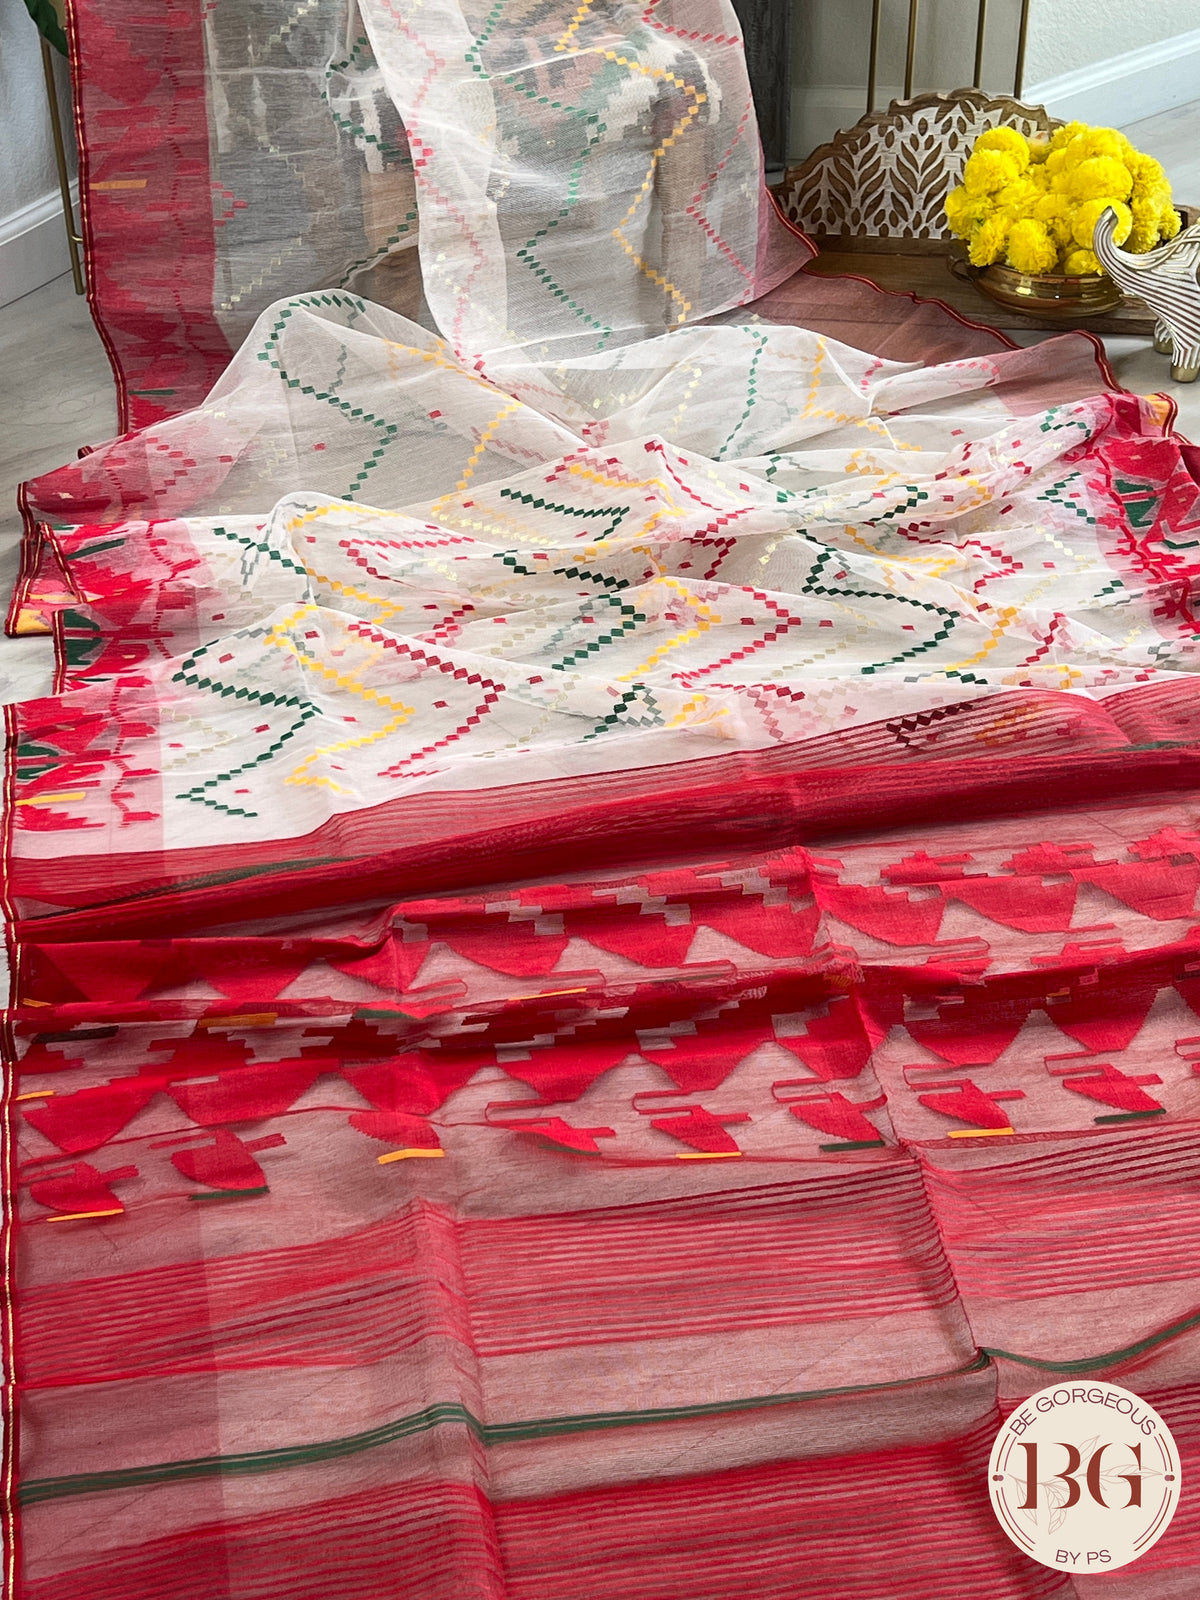 Handloom dhakai jamdani saree color - white red green yellow